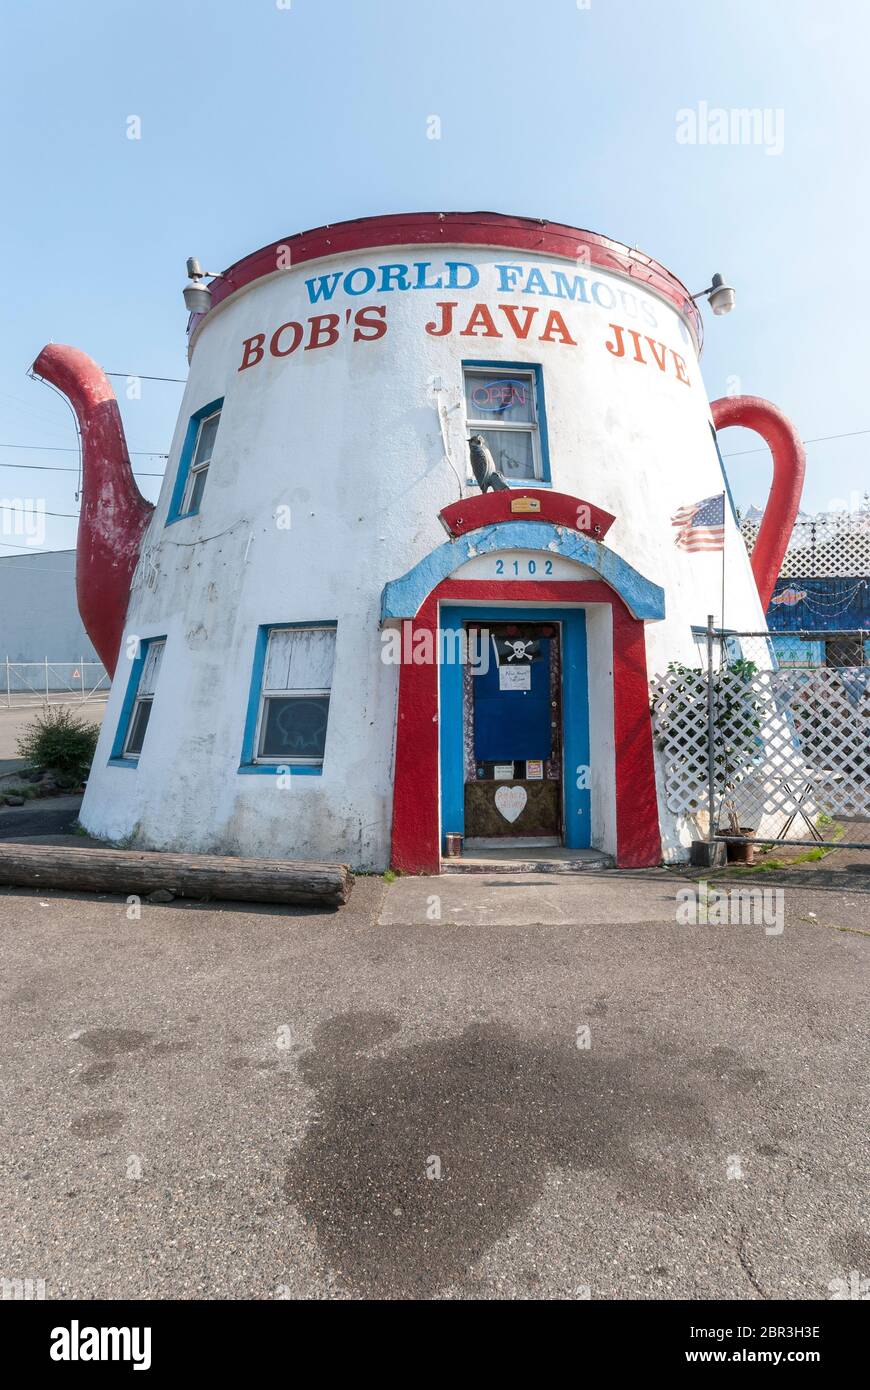 Weltberühmtes Bob's Java Jive Kaffeepot geformtes Restaurant in 2102 South Tacoma Way, in Tacoma Washington. Stockfoto